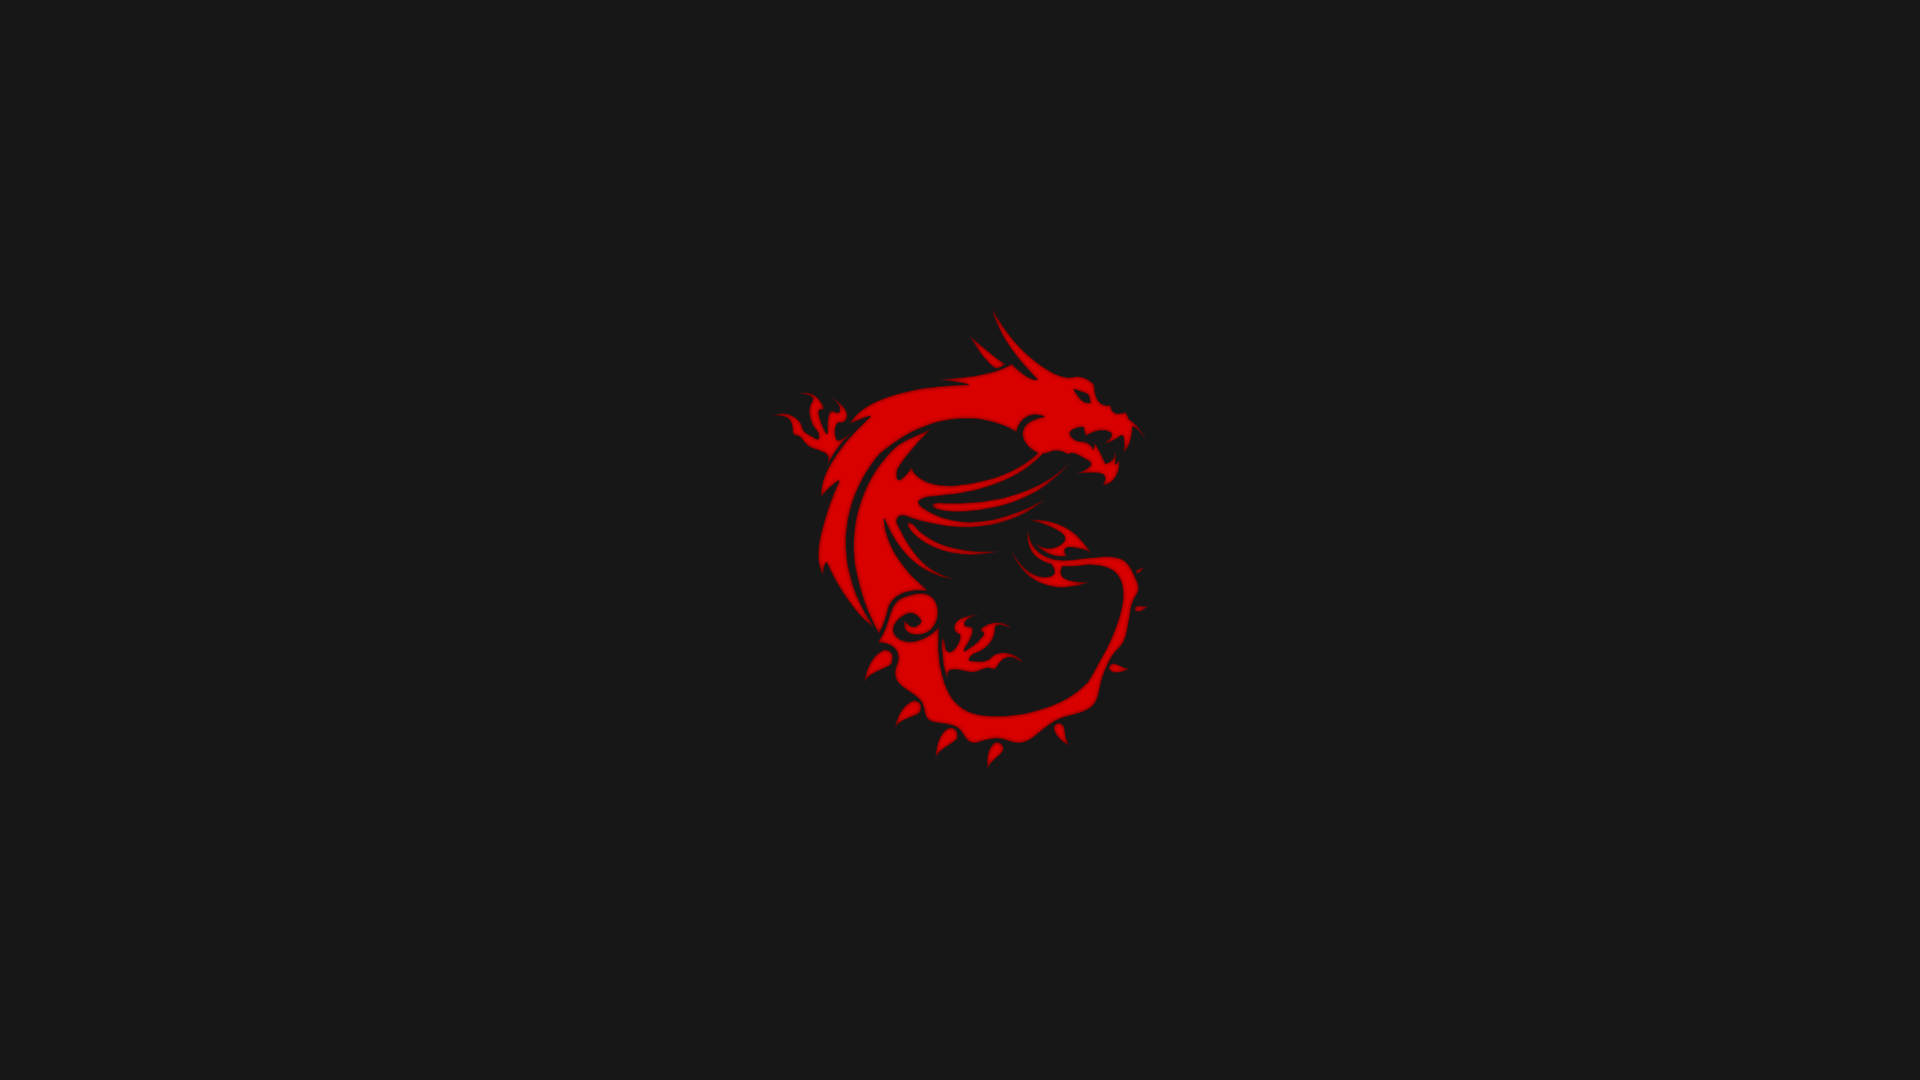 Msi Minimalist Red Dragon On Black Background Background